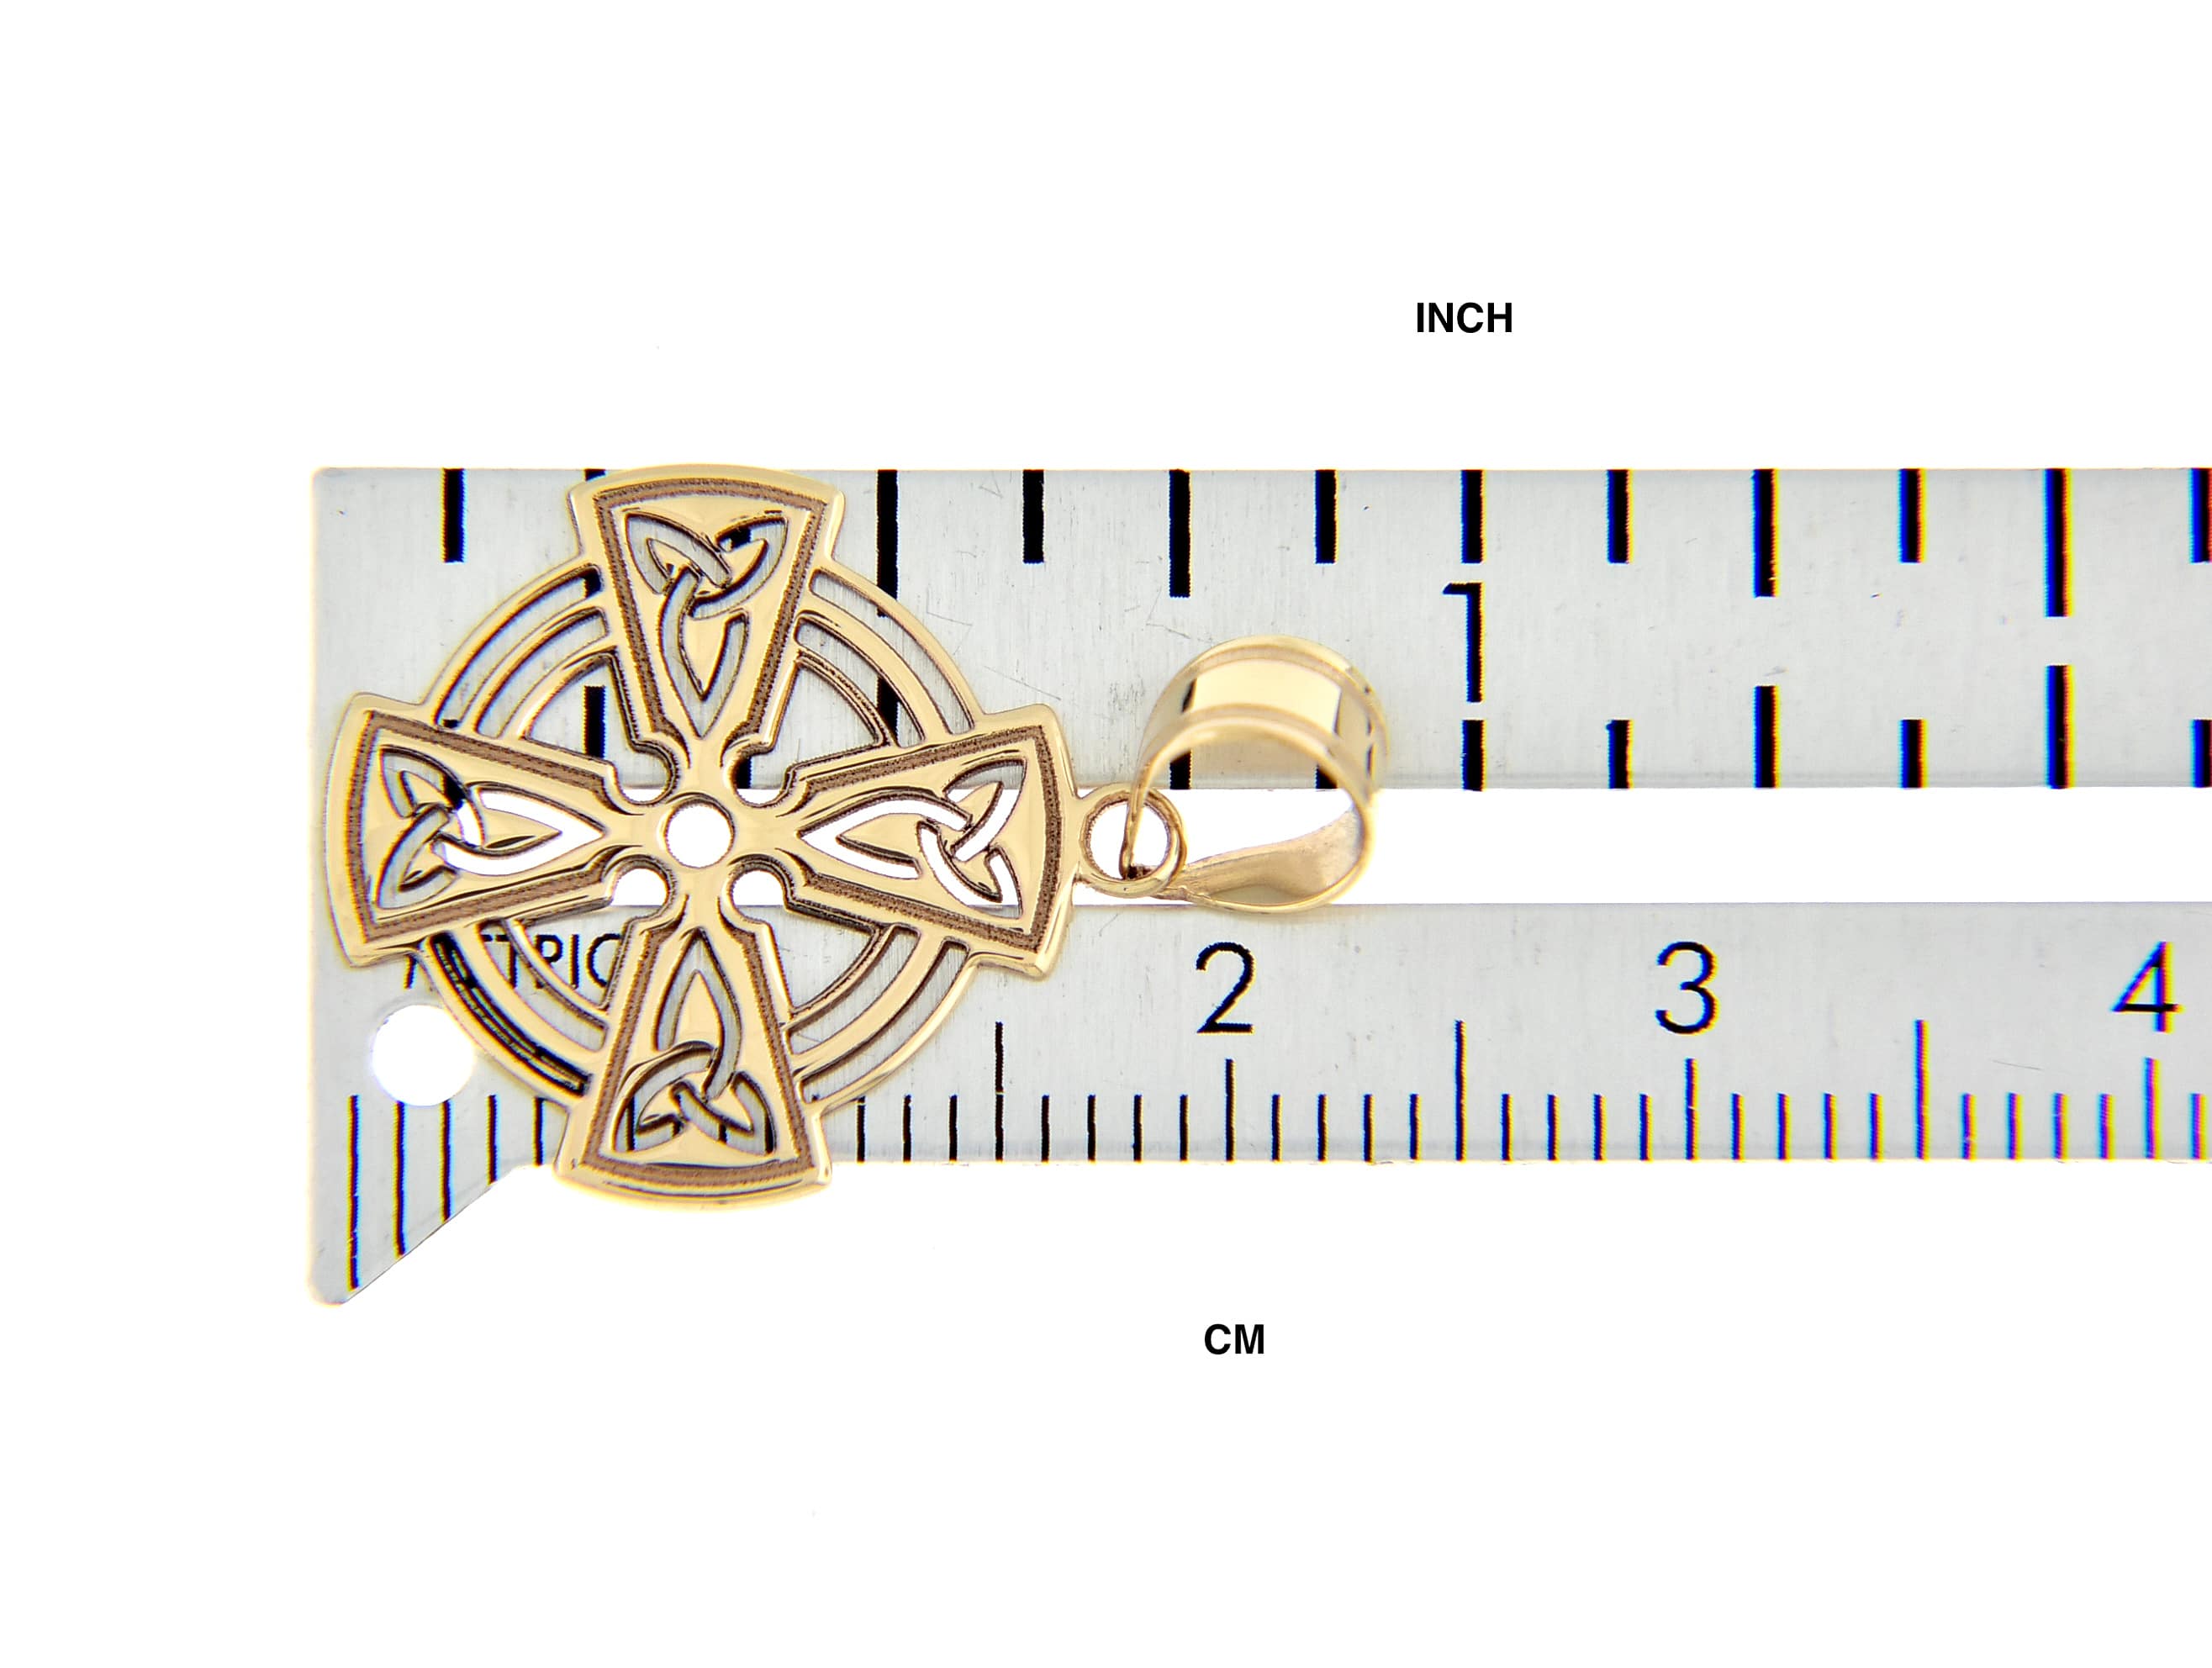 14k Yellow Gold Celtic Knot Cross Pendant Charm